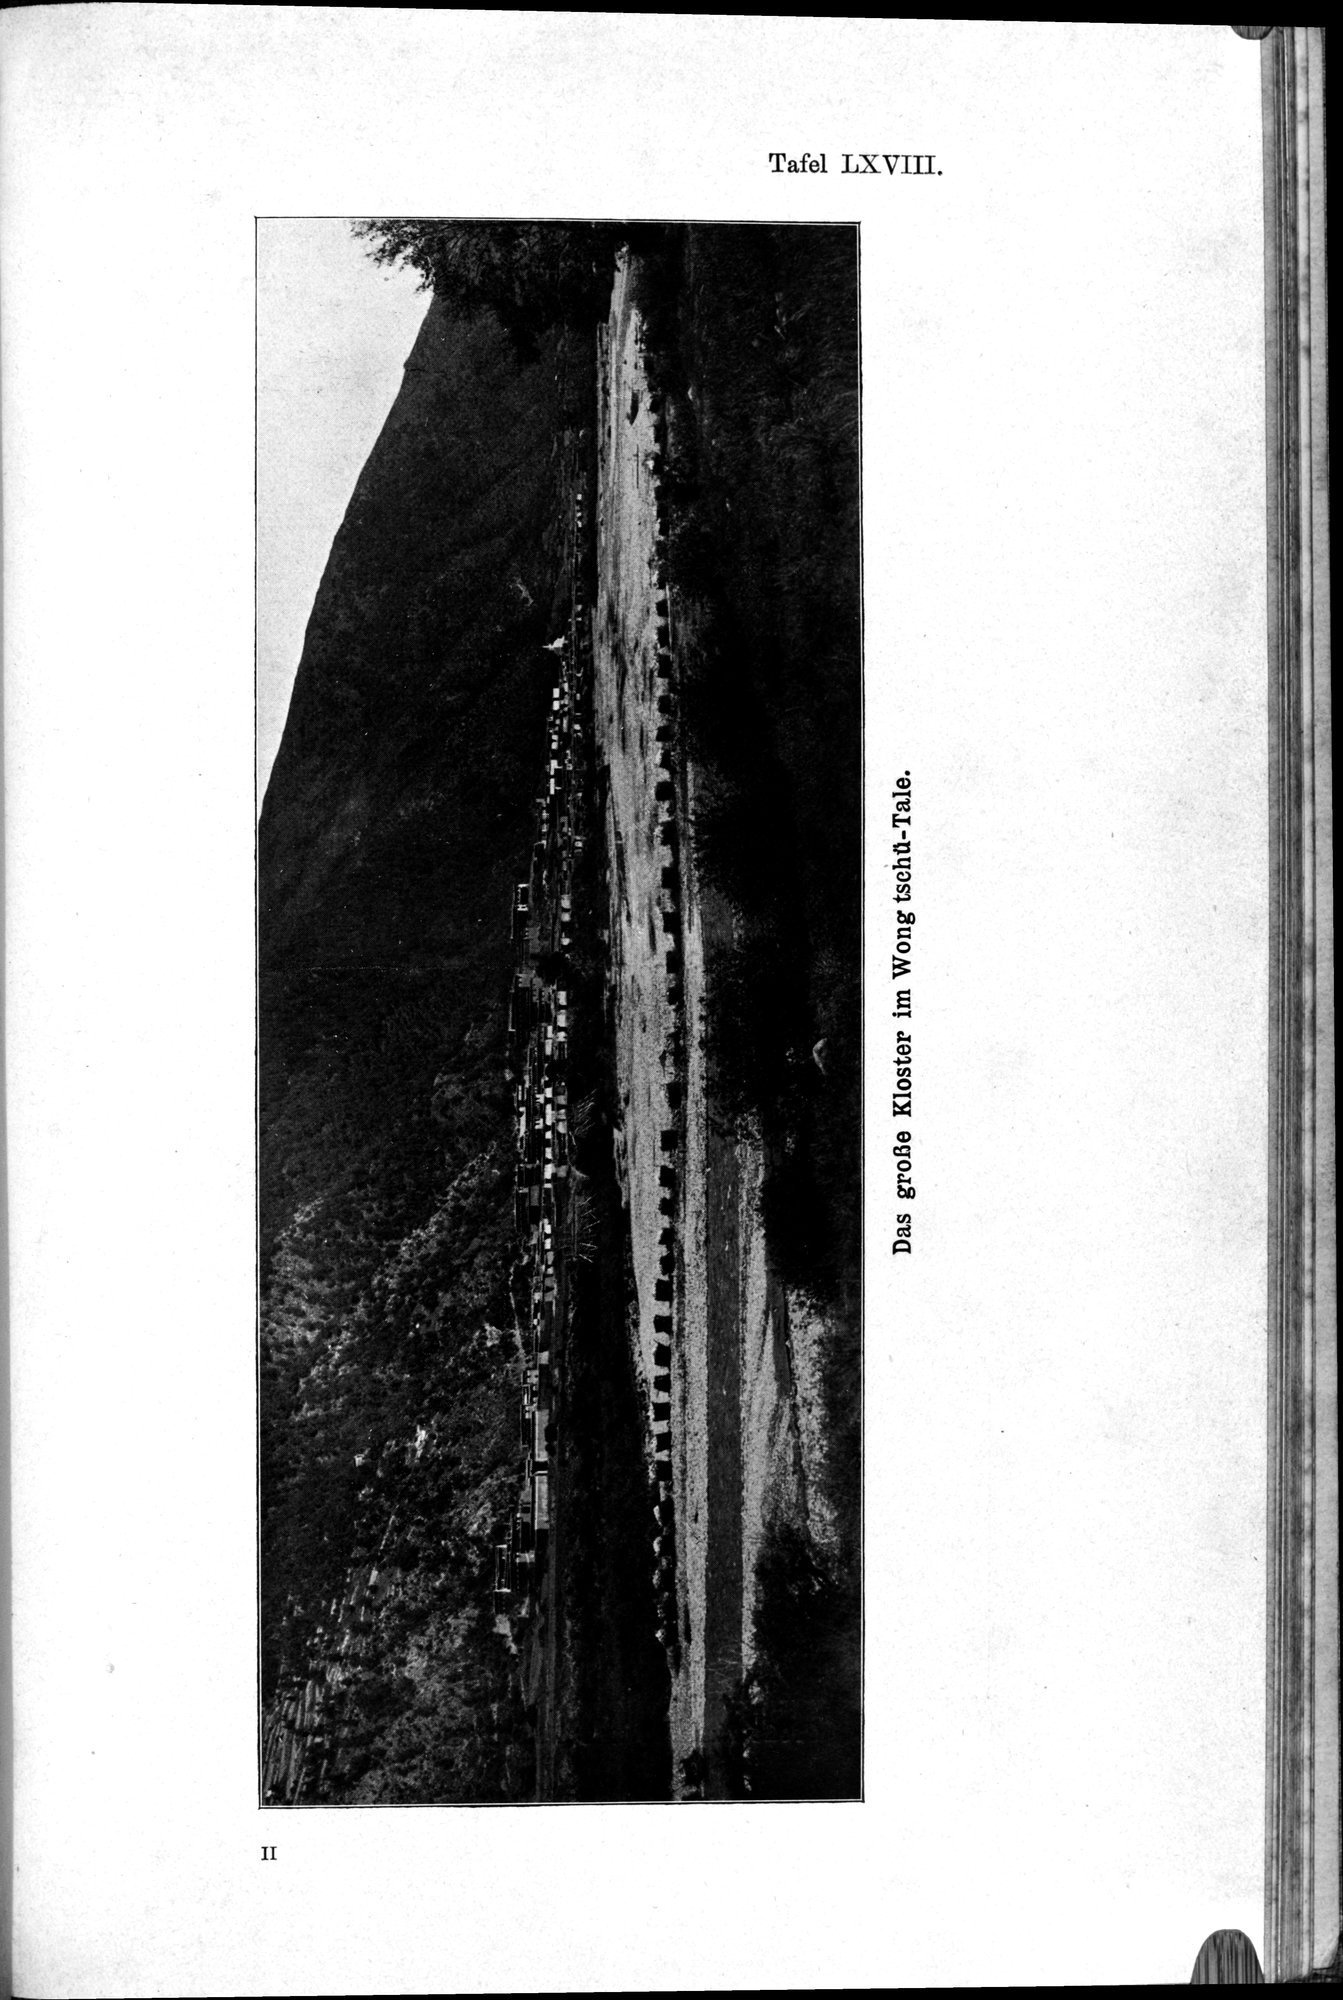 Meine Tibetreise : vol.2 / Page 383 (Grayscale High Resolution Image)